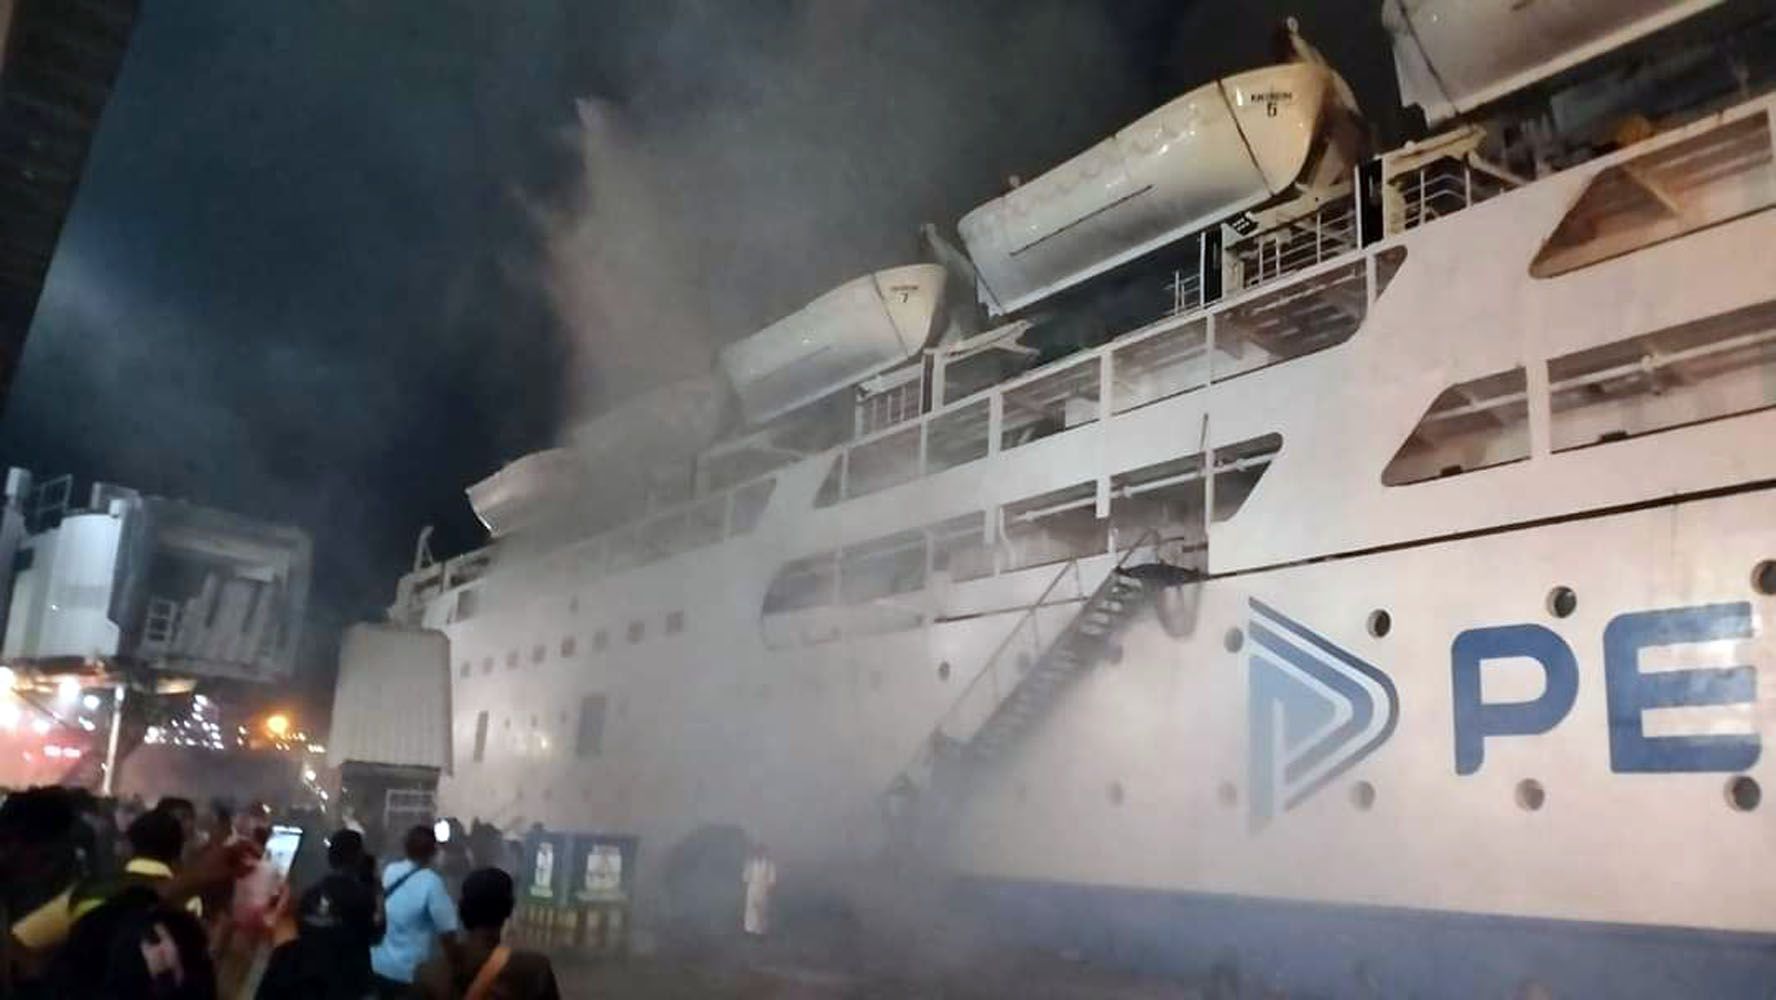 Kapal tol laut milik PELNI, KM Umsini mengalami kebakaran hebat saat bersandar di Pelabuhan Soekarno Hatta Makassar pagi tadi. Saat ini proses pemadaman sedang berlangsung